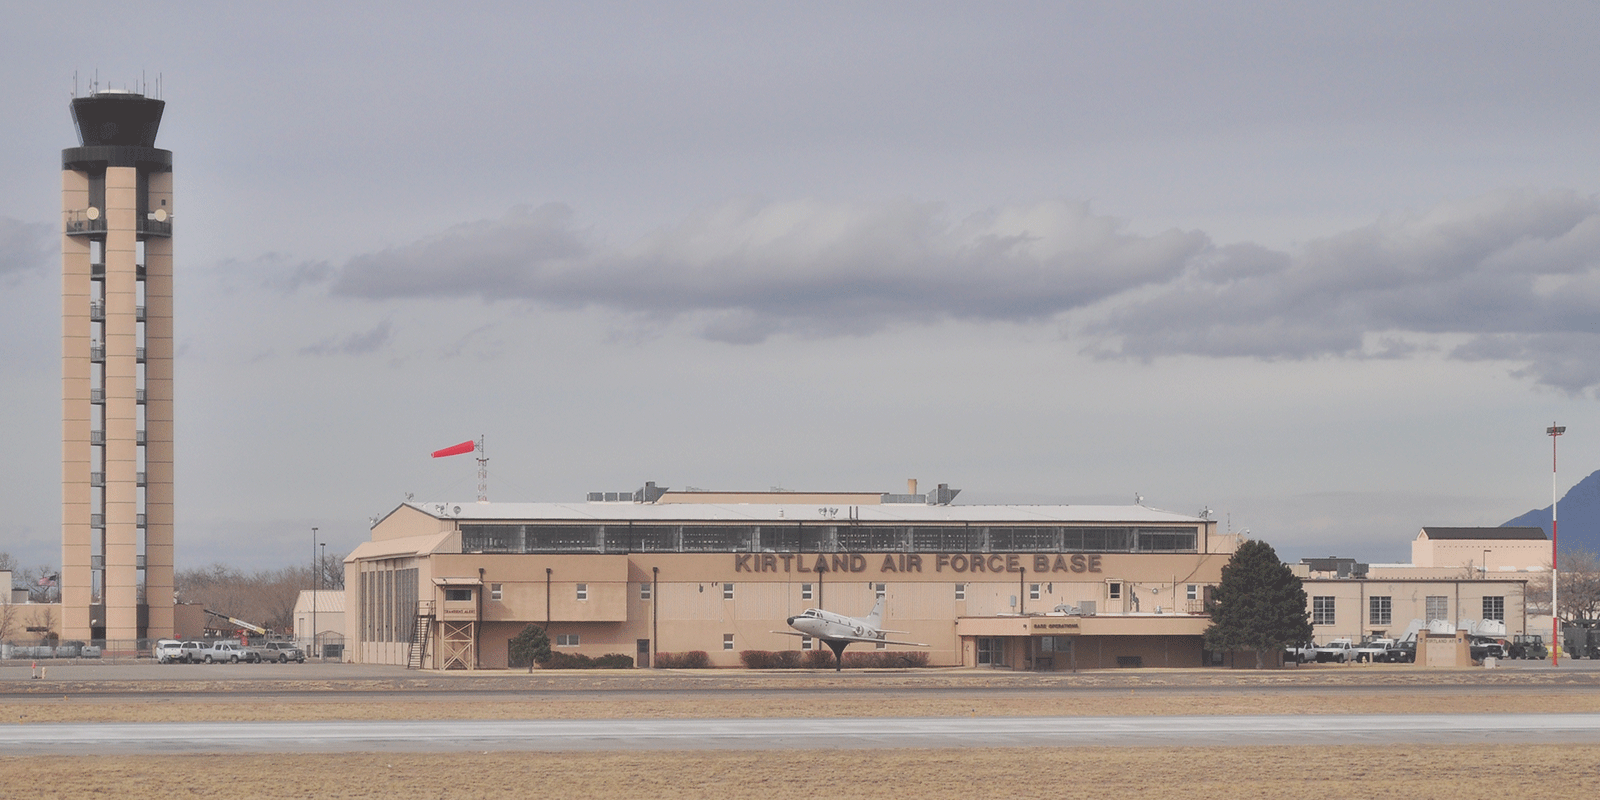 Kirtland Air force Base from far away